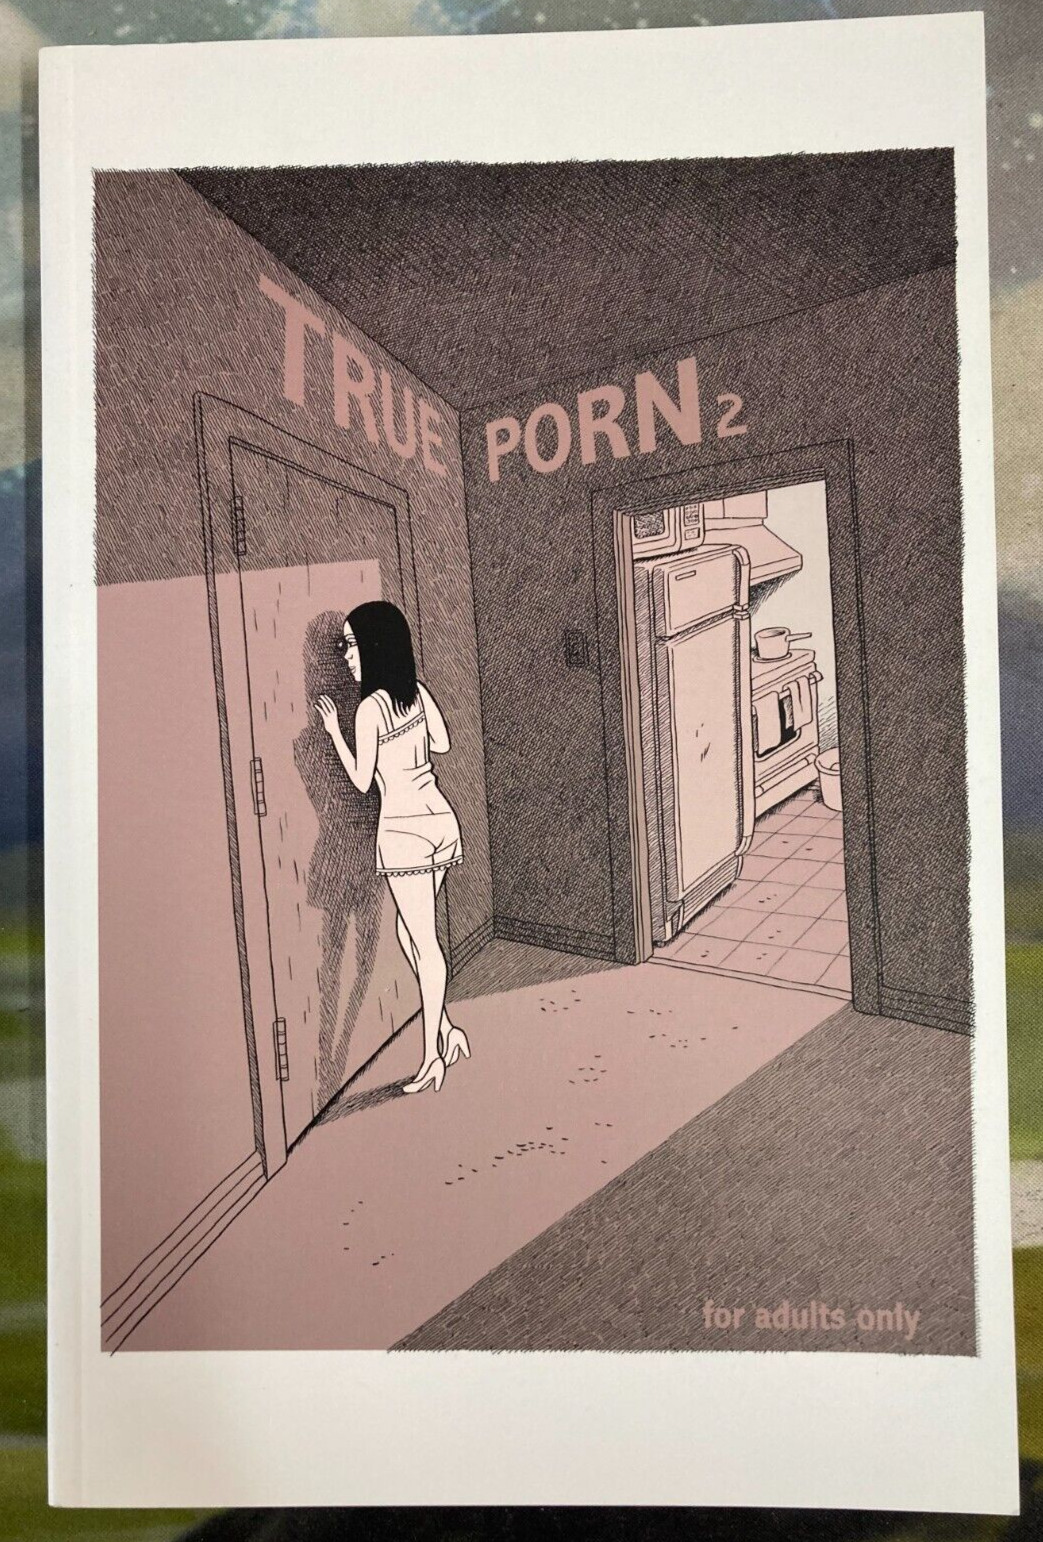 True Porn 2 Alternative Comics Graphic Anthology by Kelli Nelson & Robyn Chapman